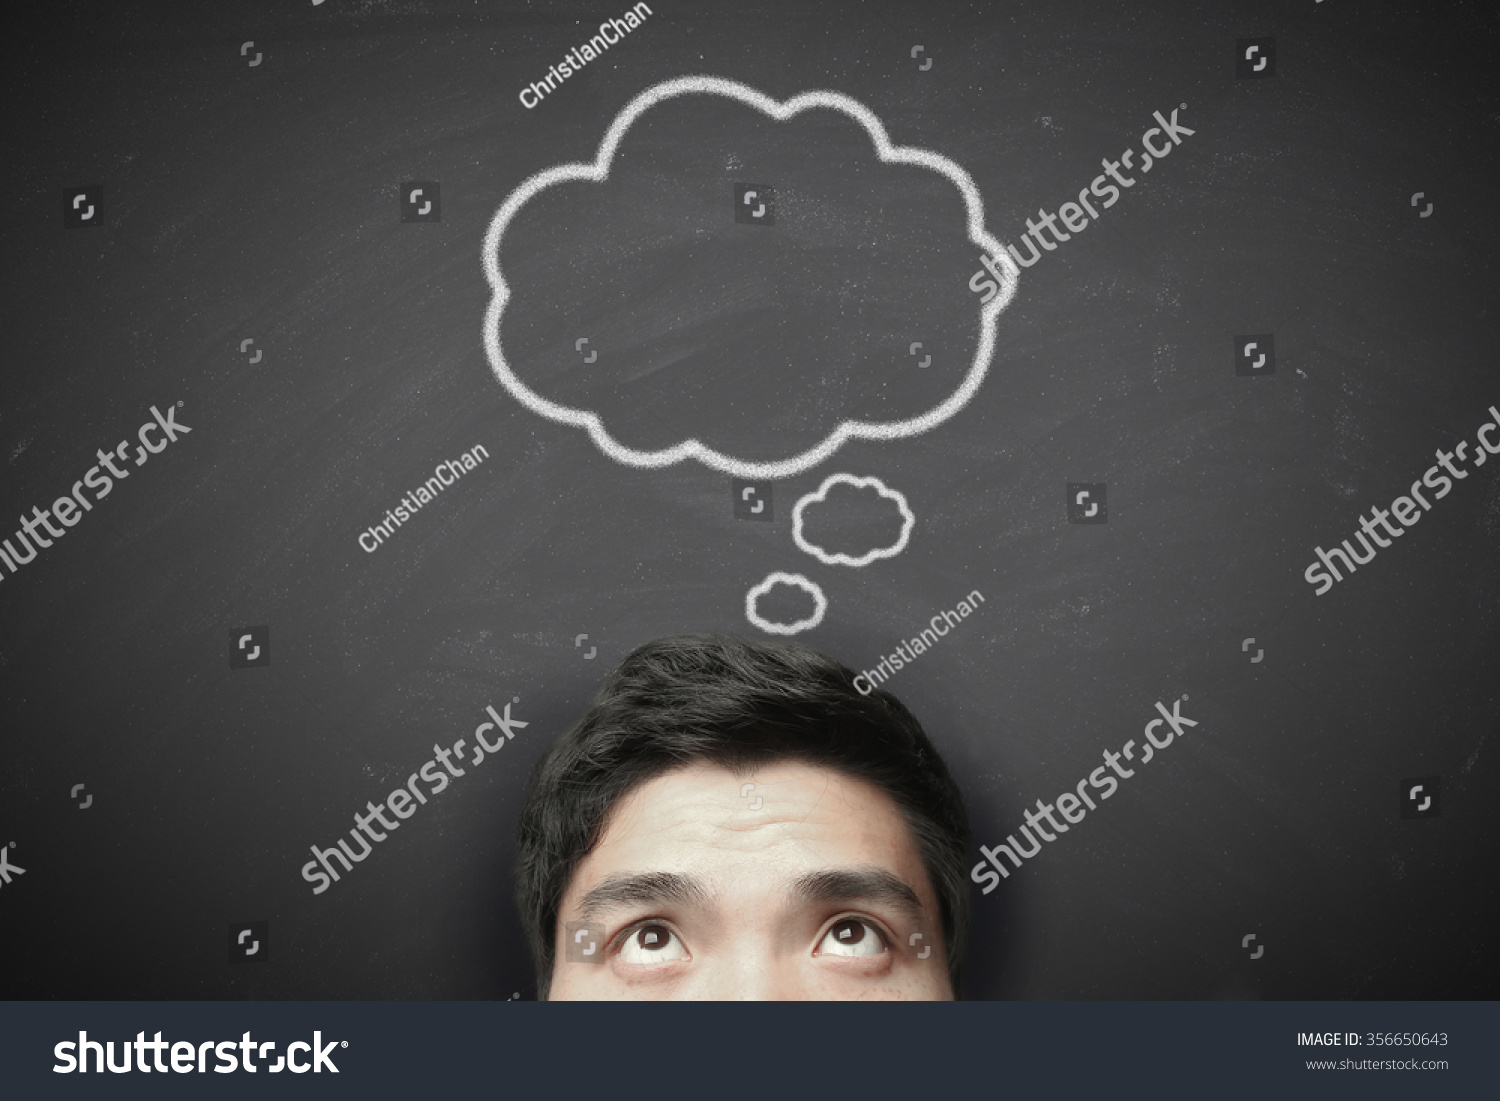 Thinking man with thinking bubble on blackboard background. #356650643